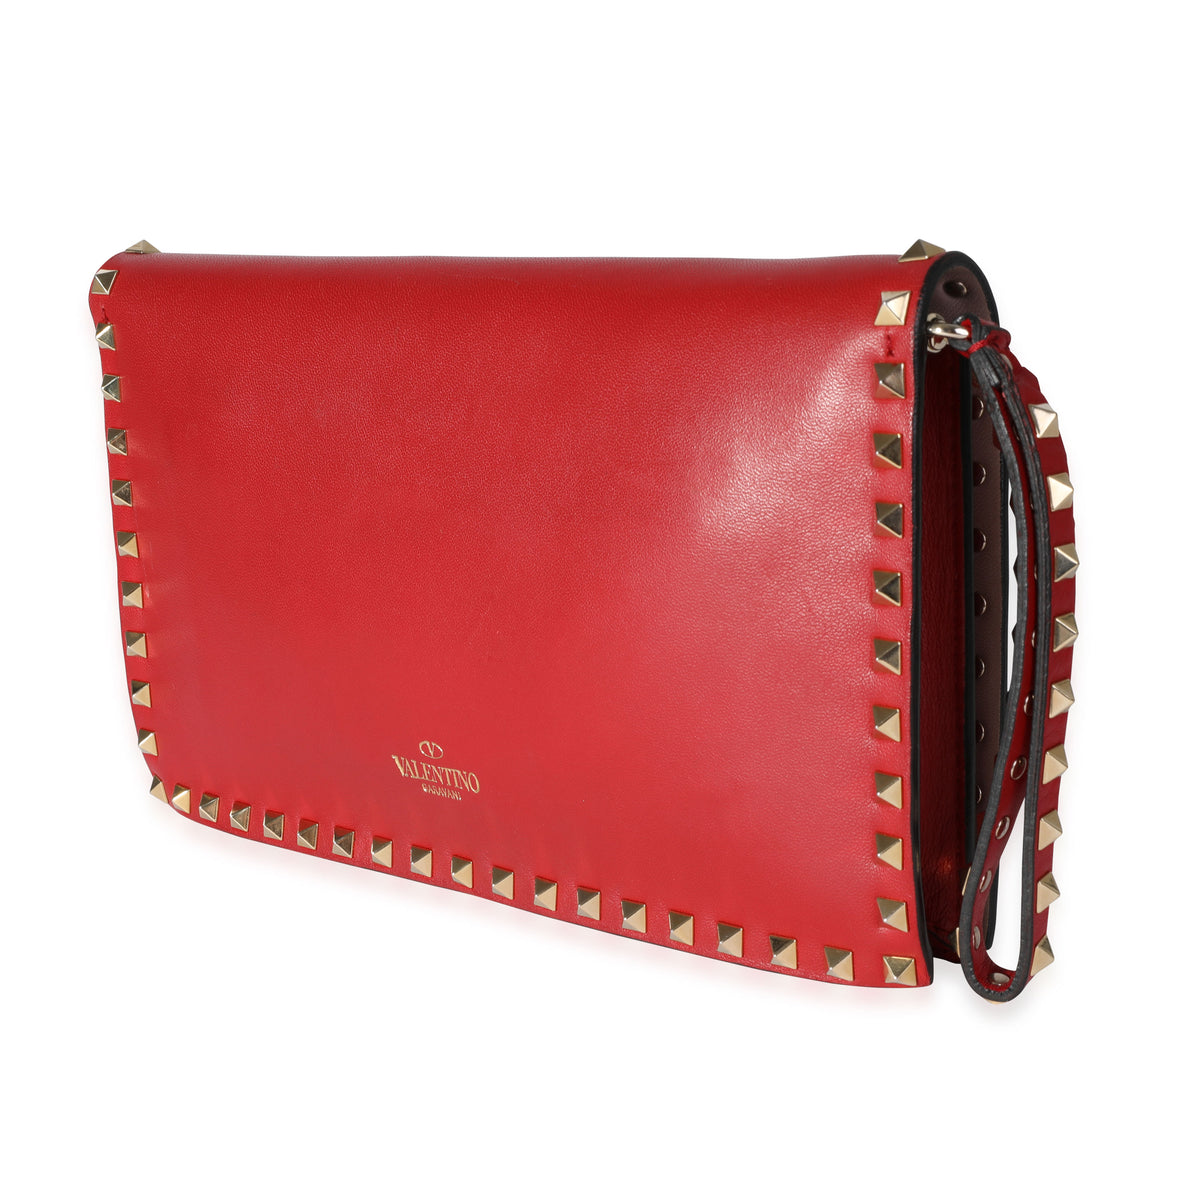 Valentino Red Nappa Leather Rockstud Wristlet Clutch